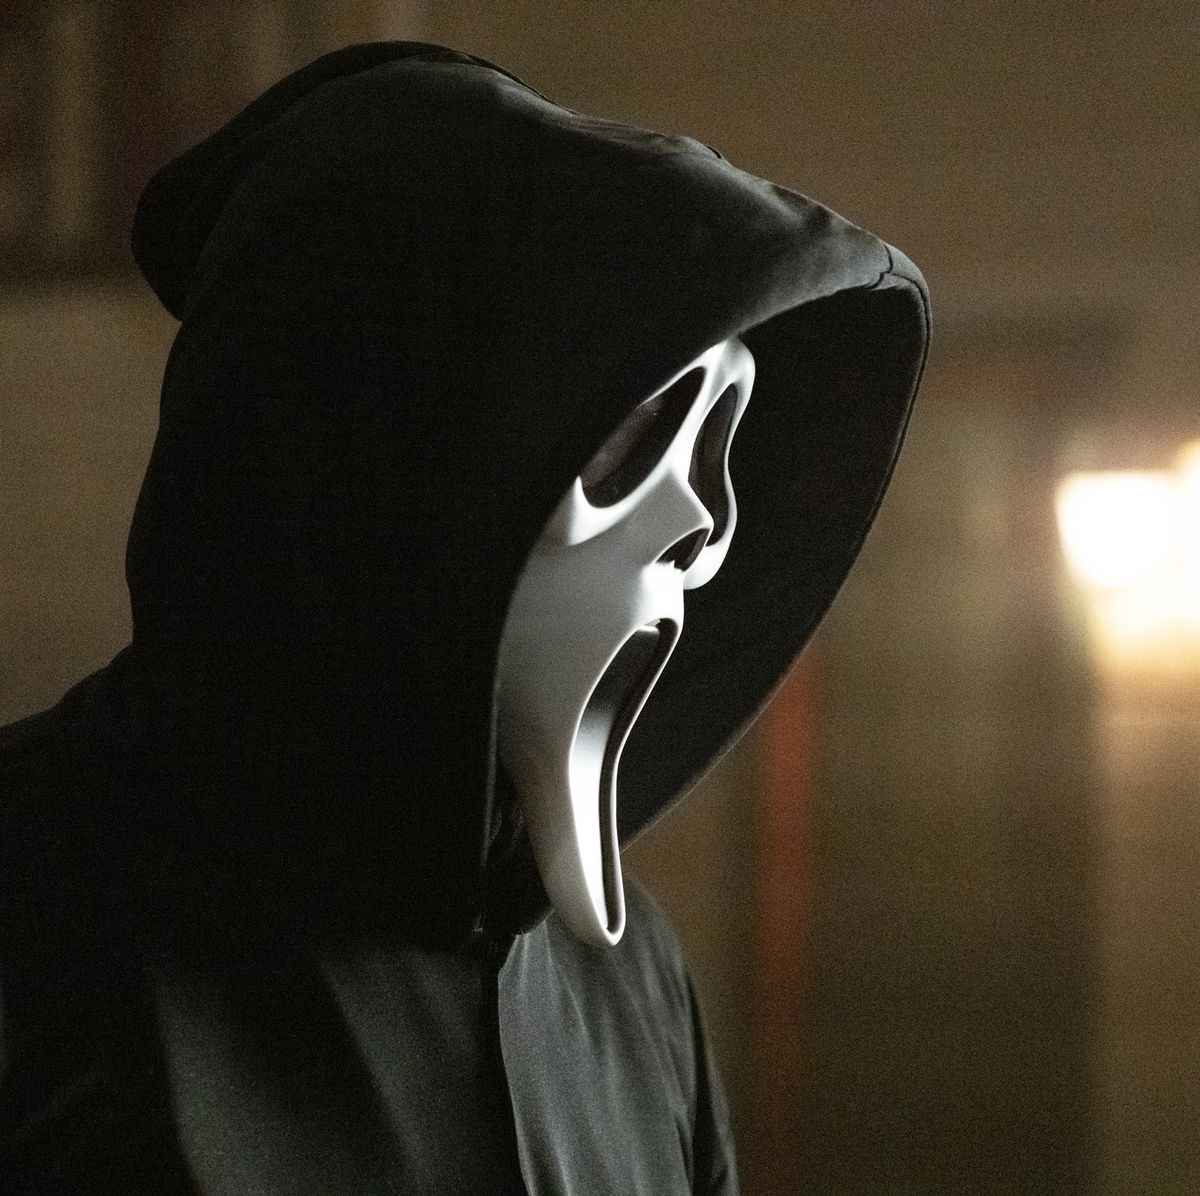 Scream 6 Poster Hints at Major Horror Sequel Plot Details